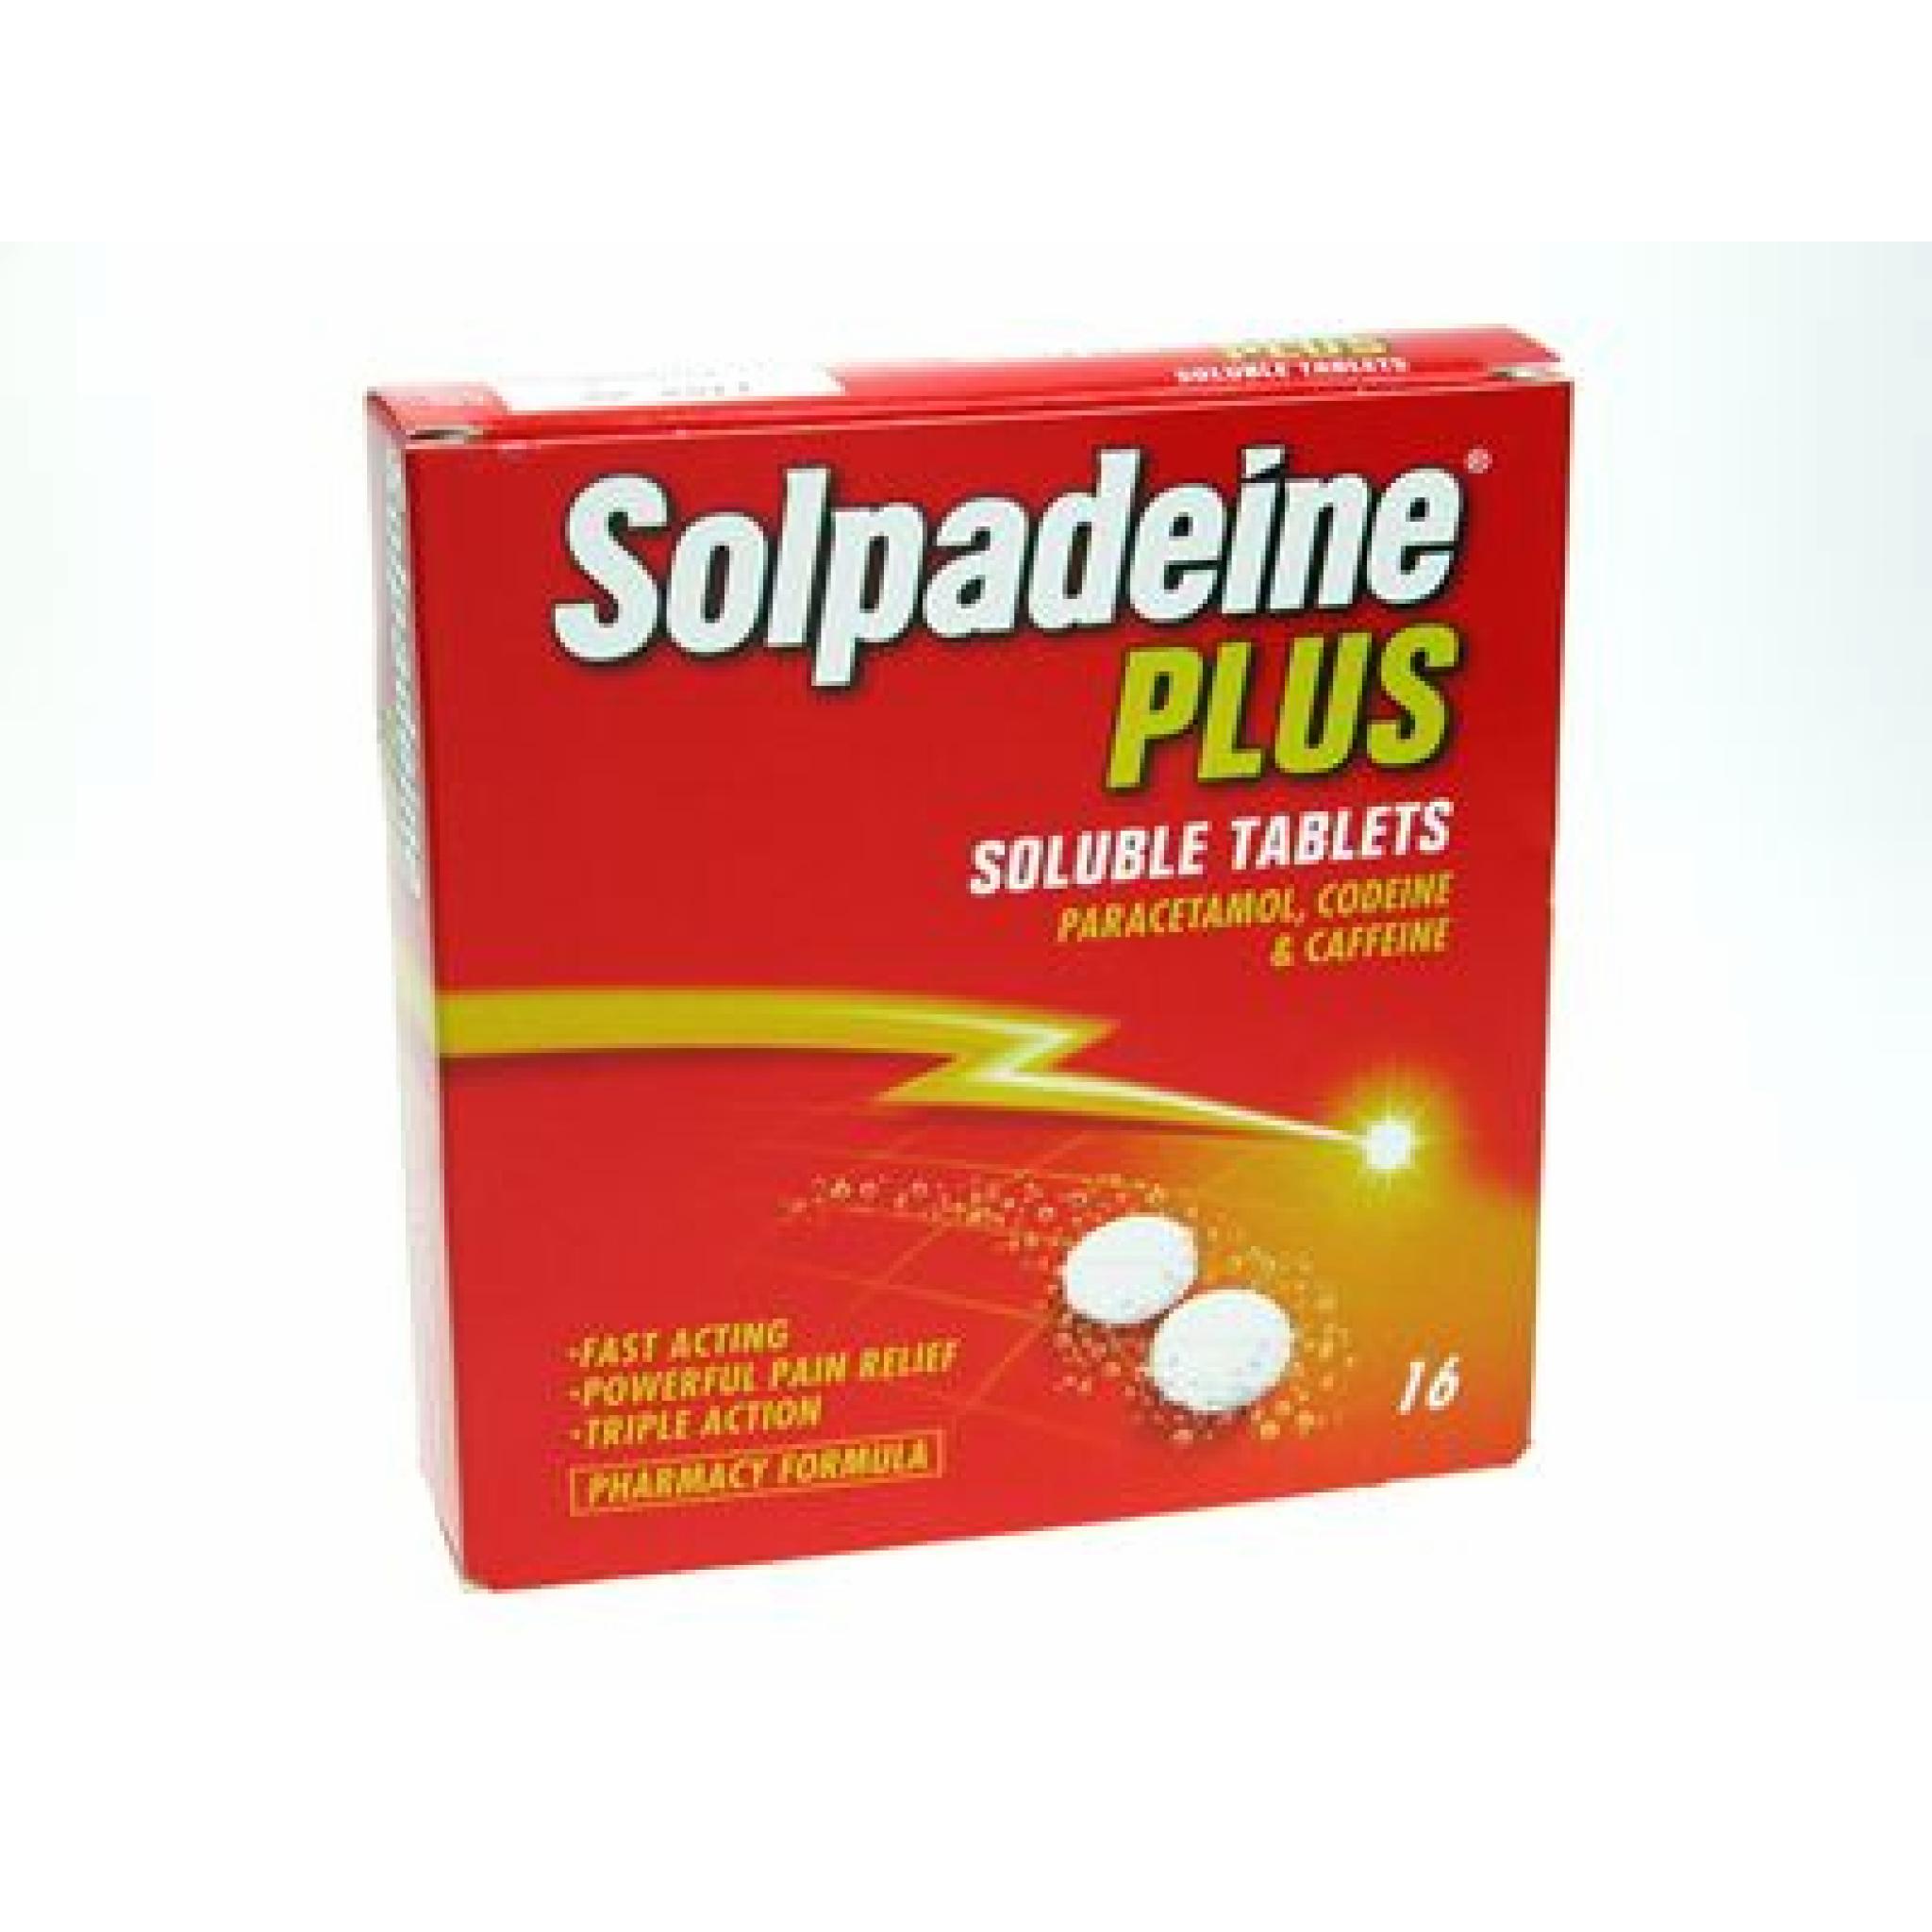 Solpadeine plus soluble tablets - paracetamol, codeine & caffeine